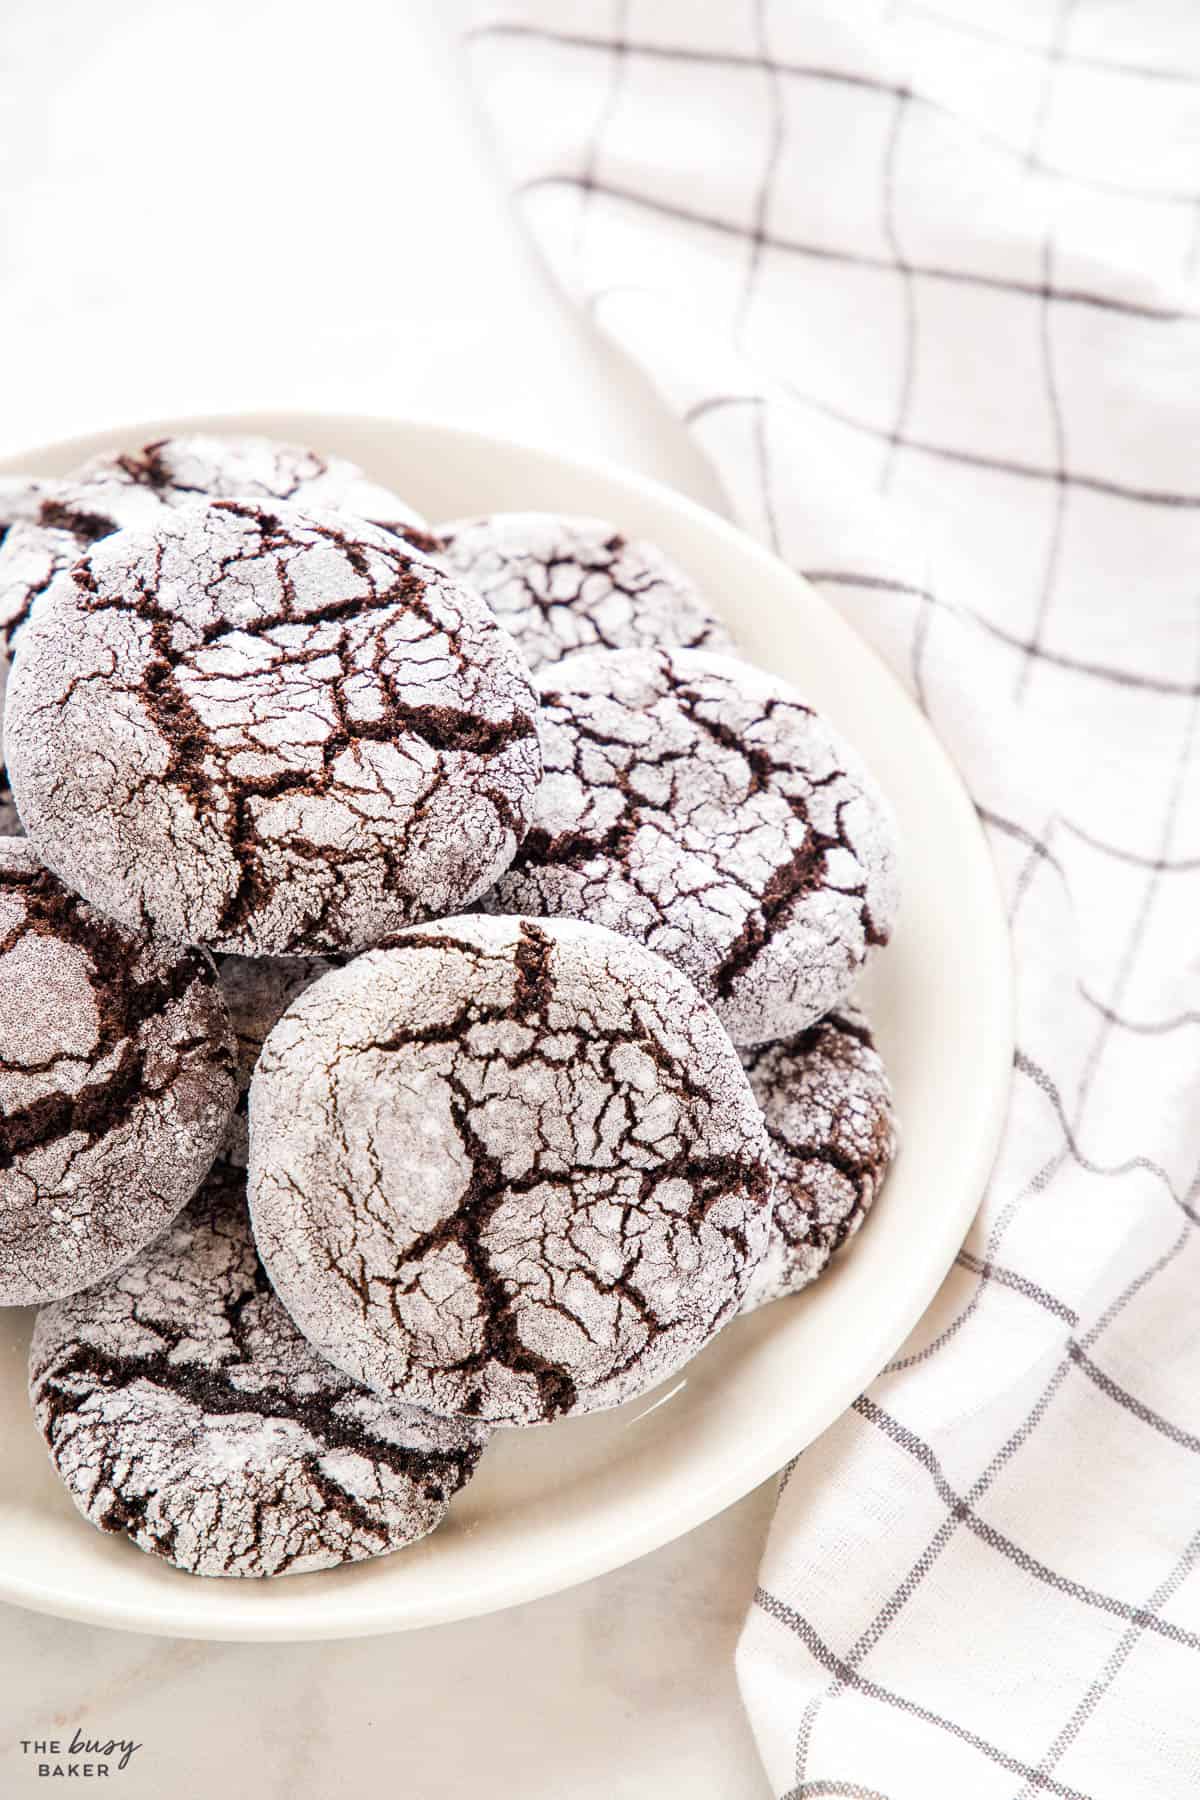 a plate of chocolate crinkle cookies